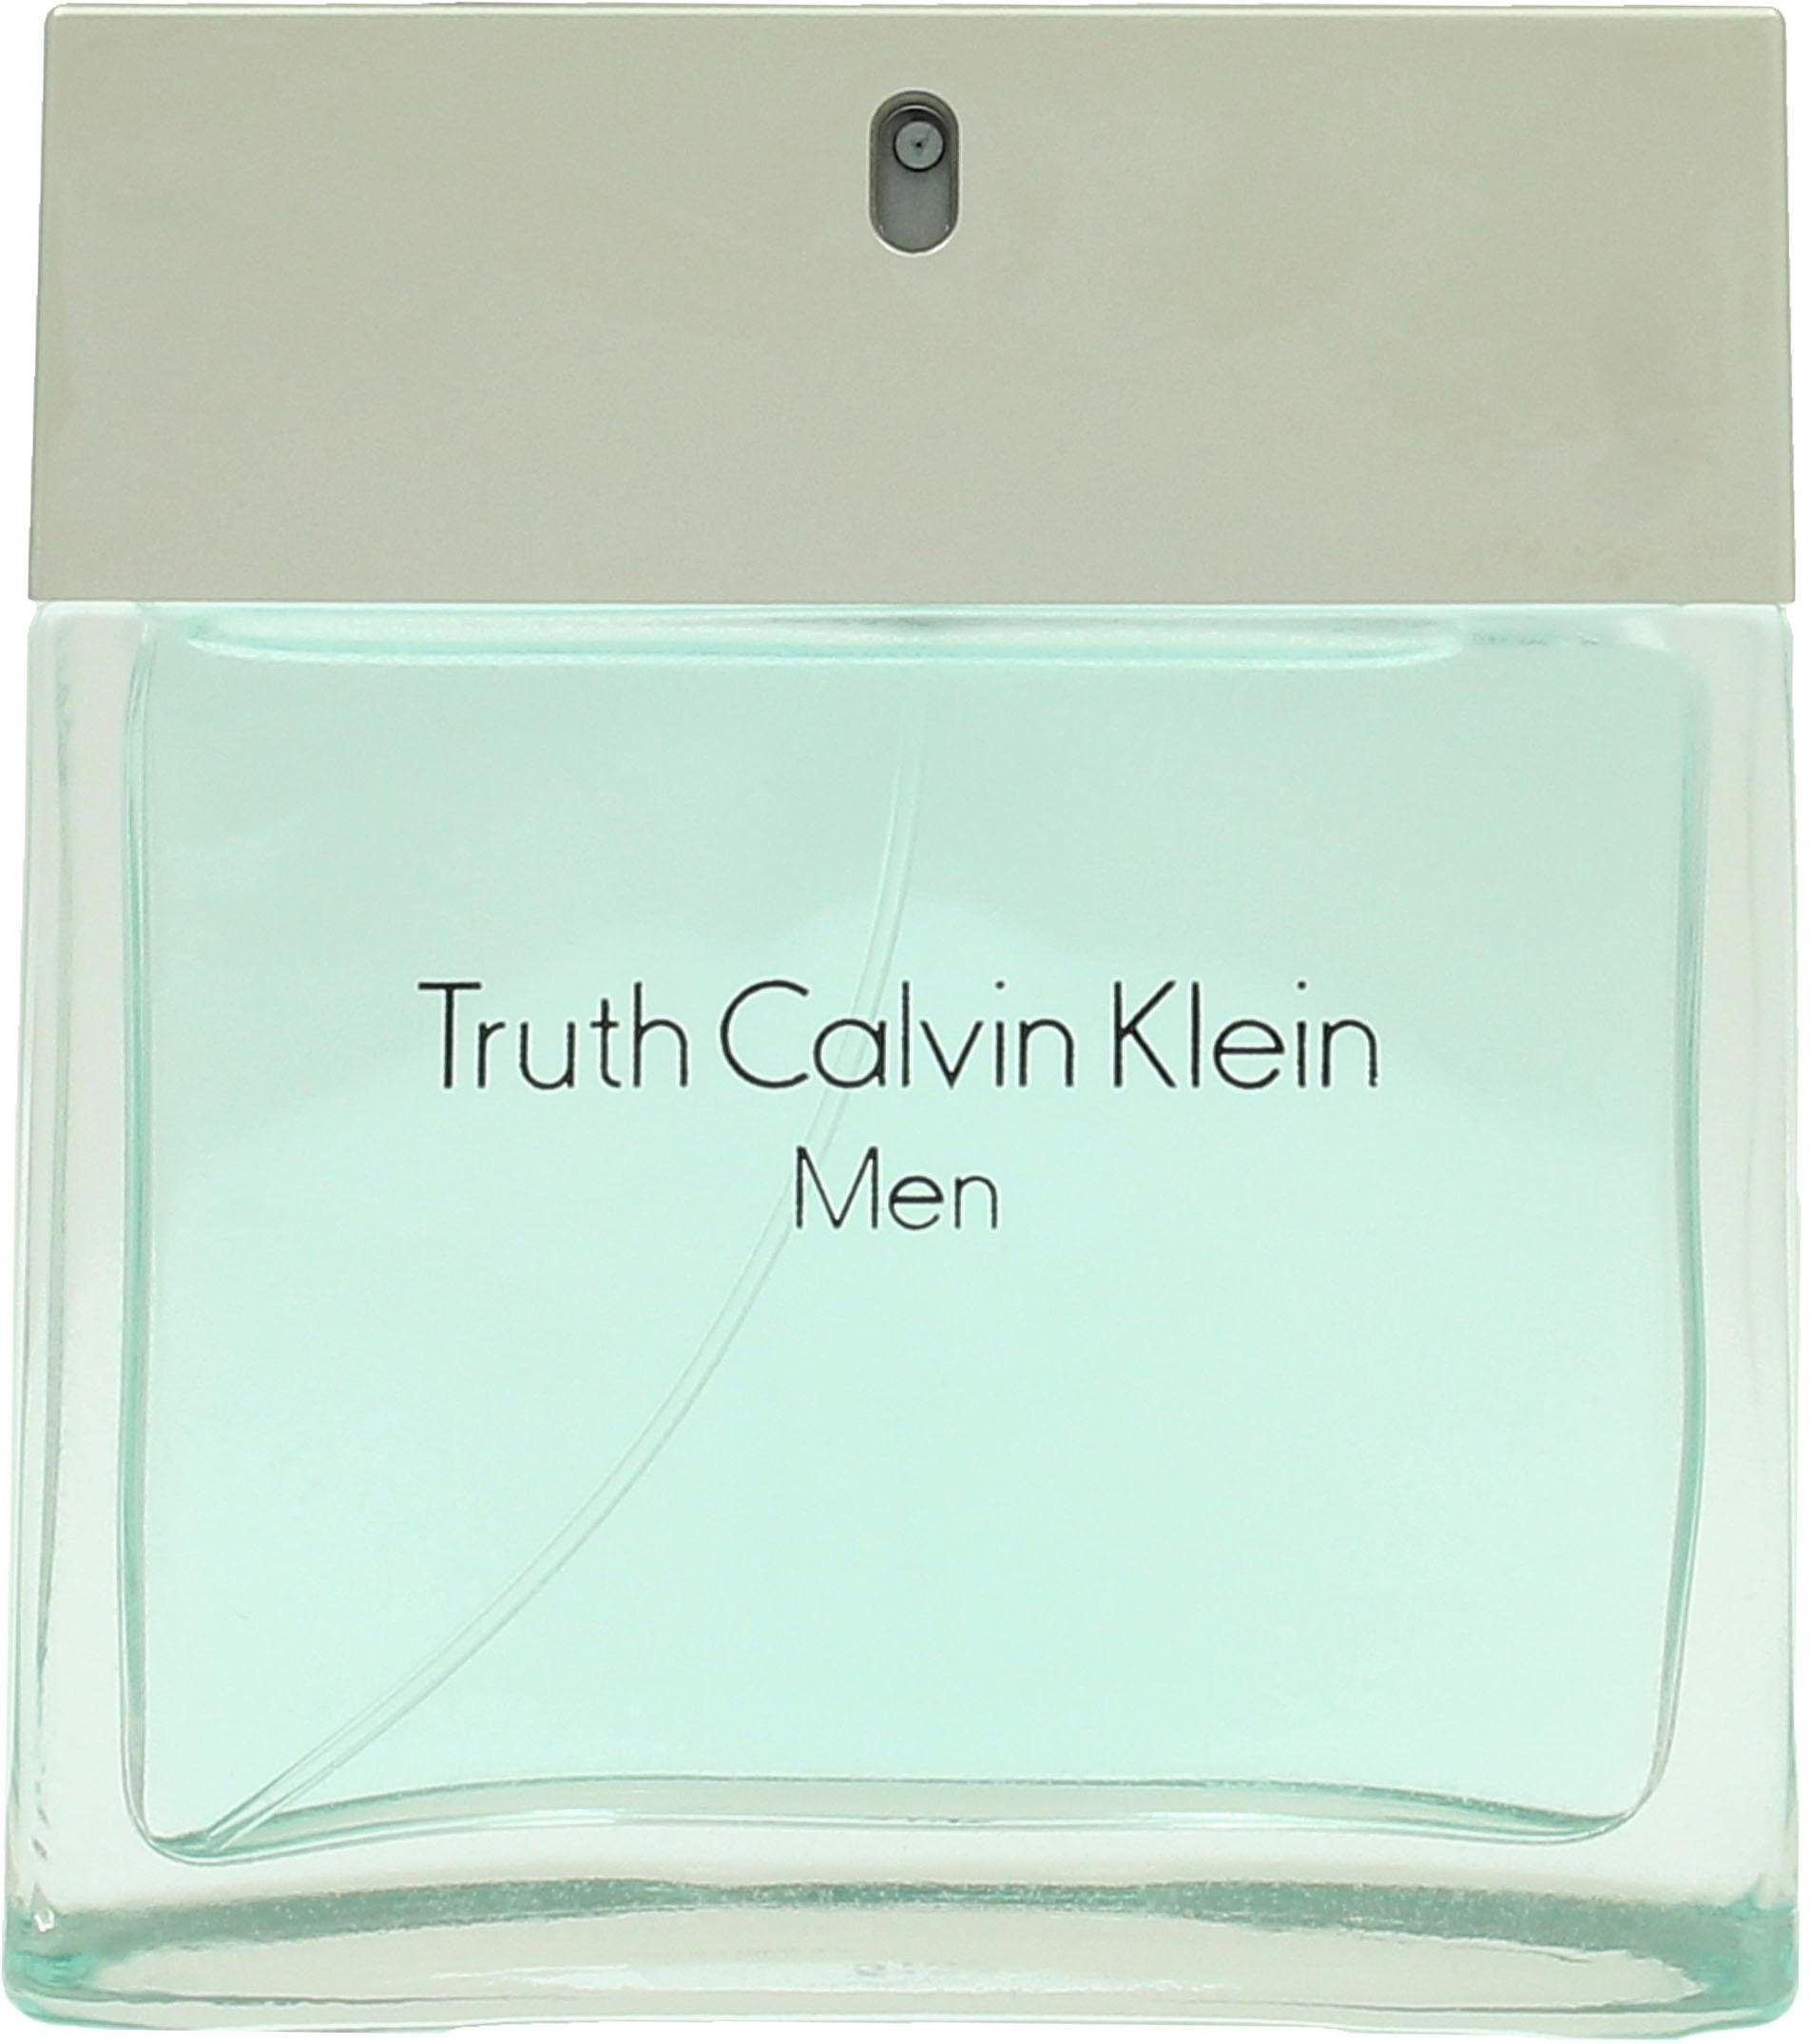 Calvin Klein Eau Men Truth Toilette de